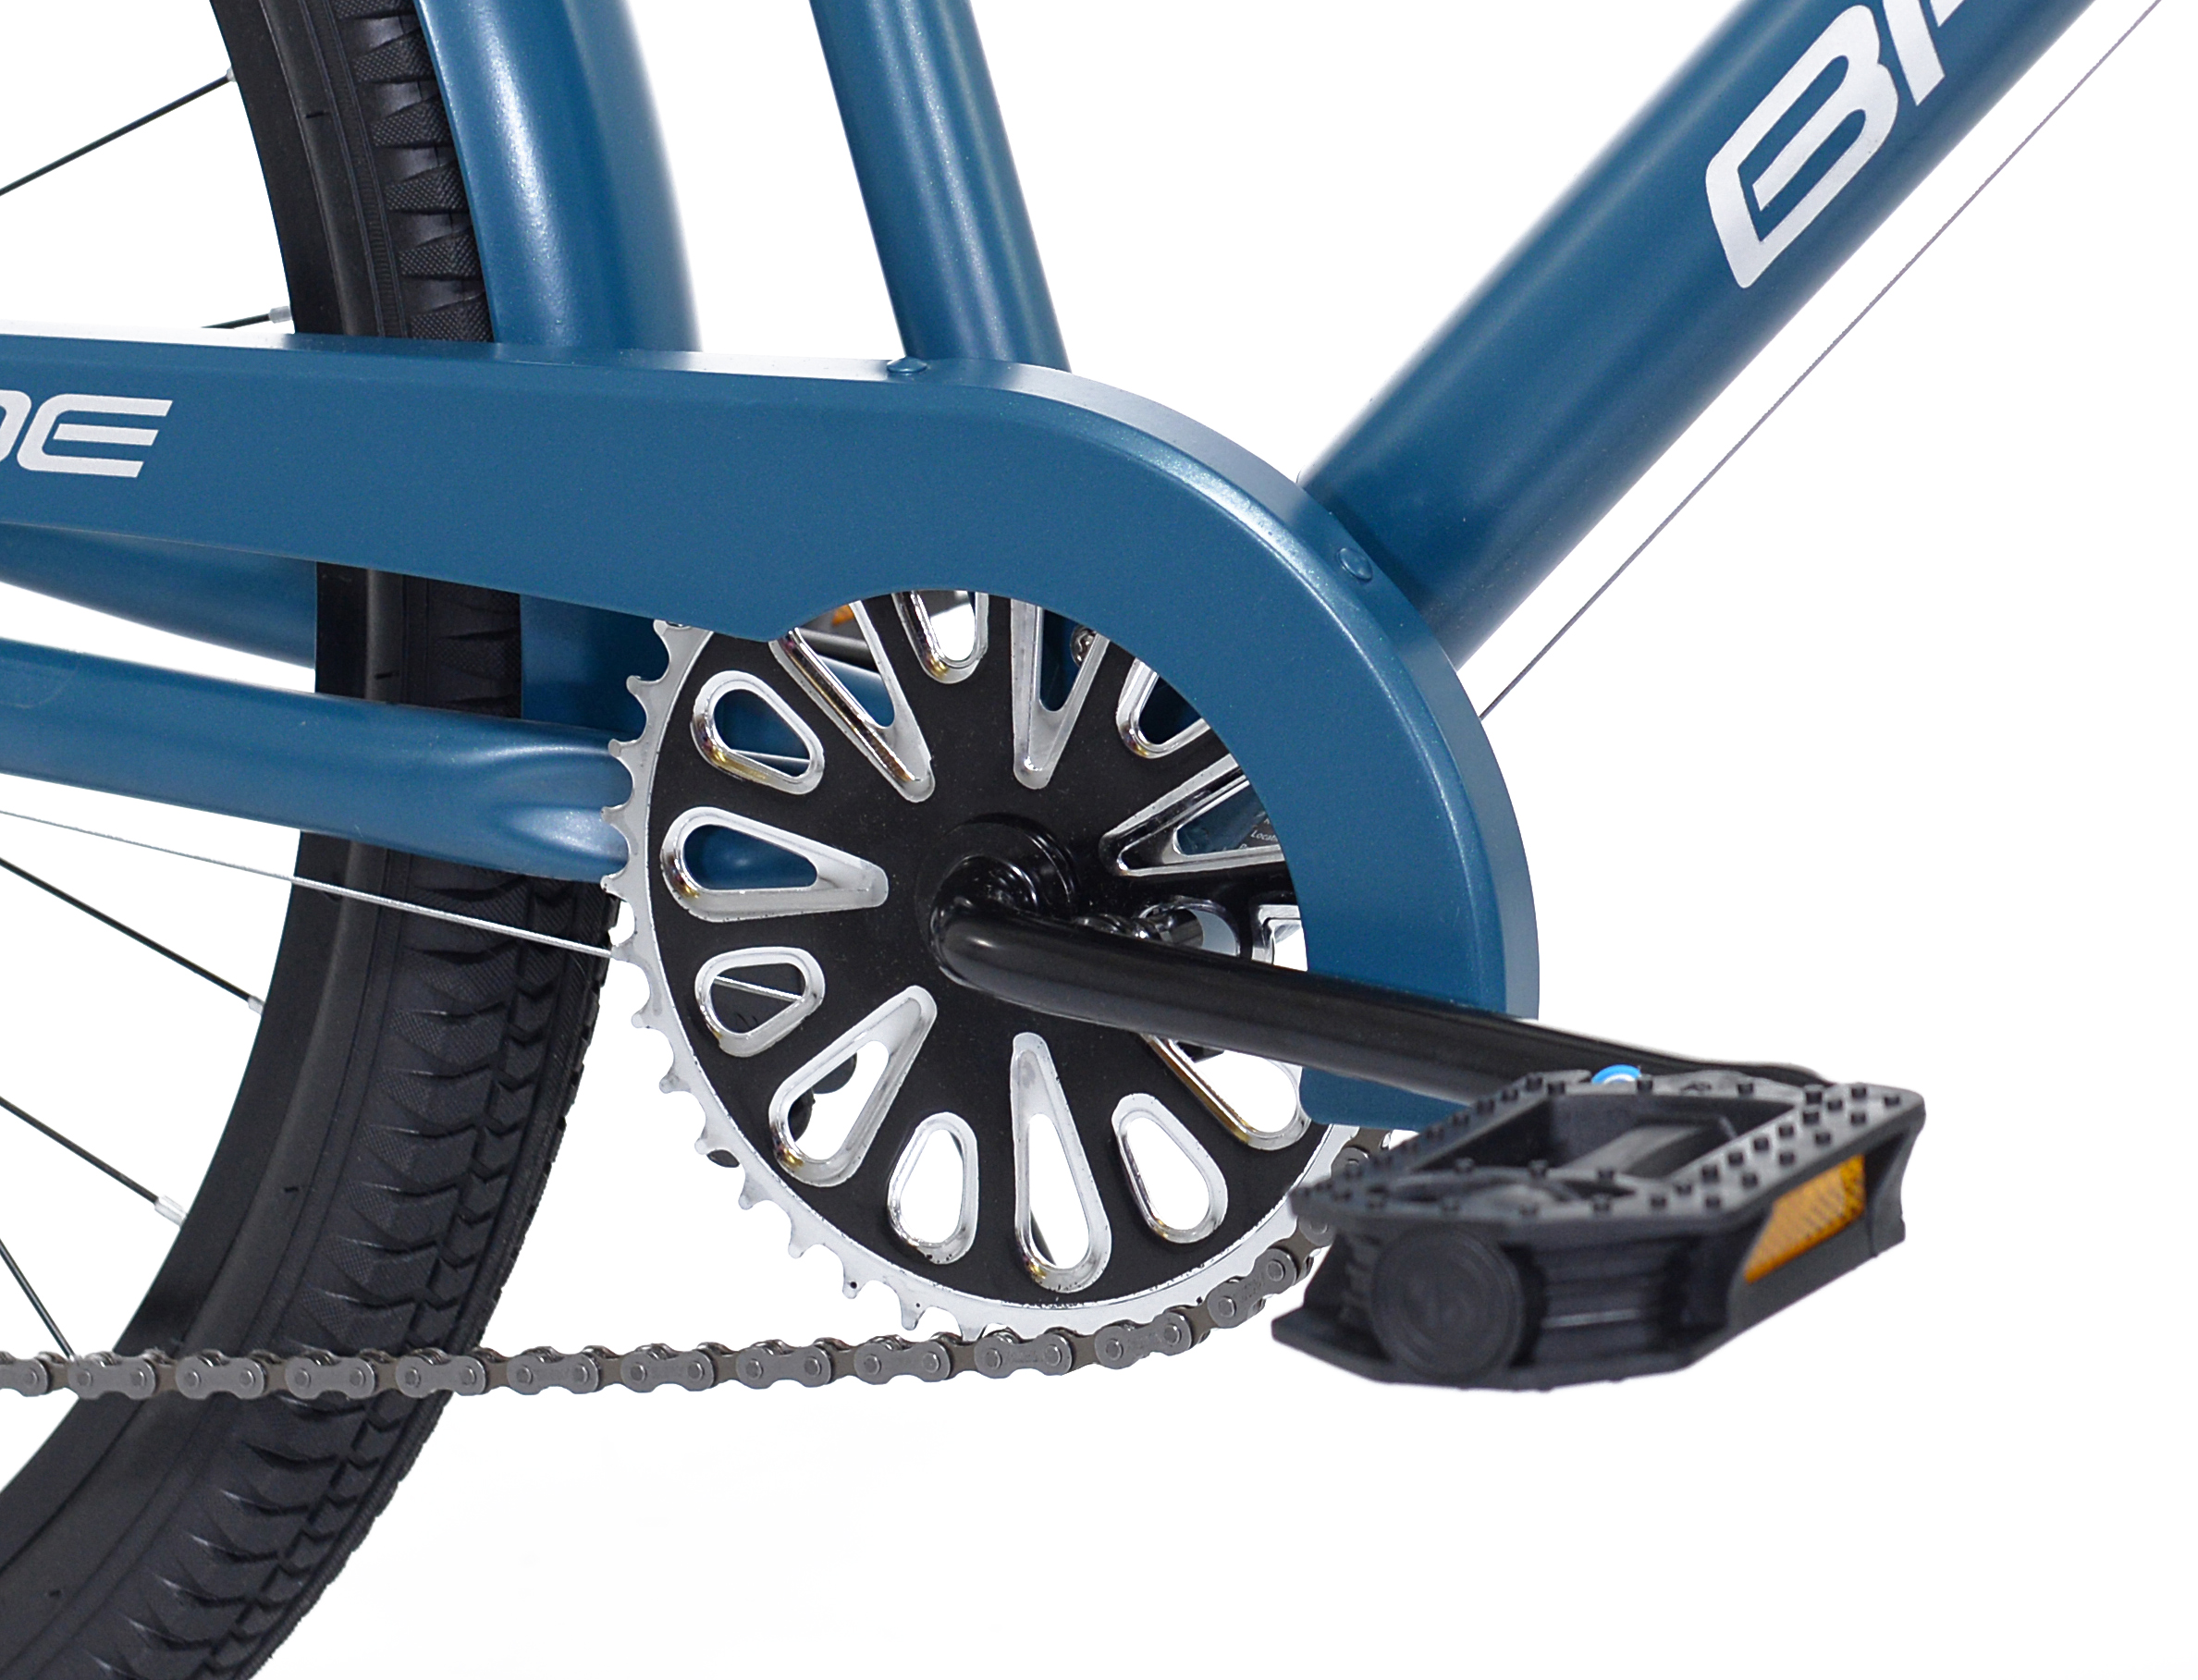 Kent Bicycle 26-inch Bayside Men's Cruiser Bicycle, Blue - image 5 of 8